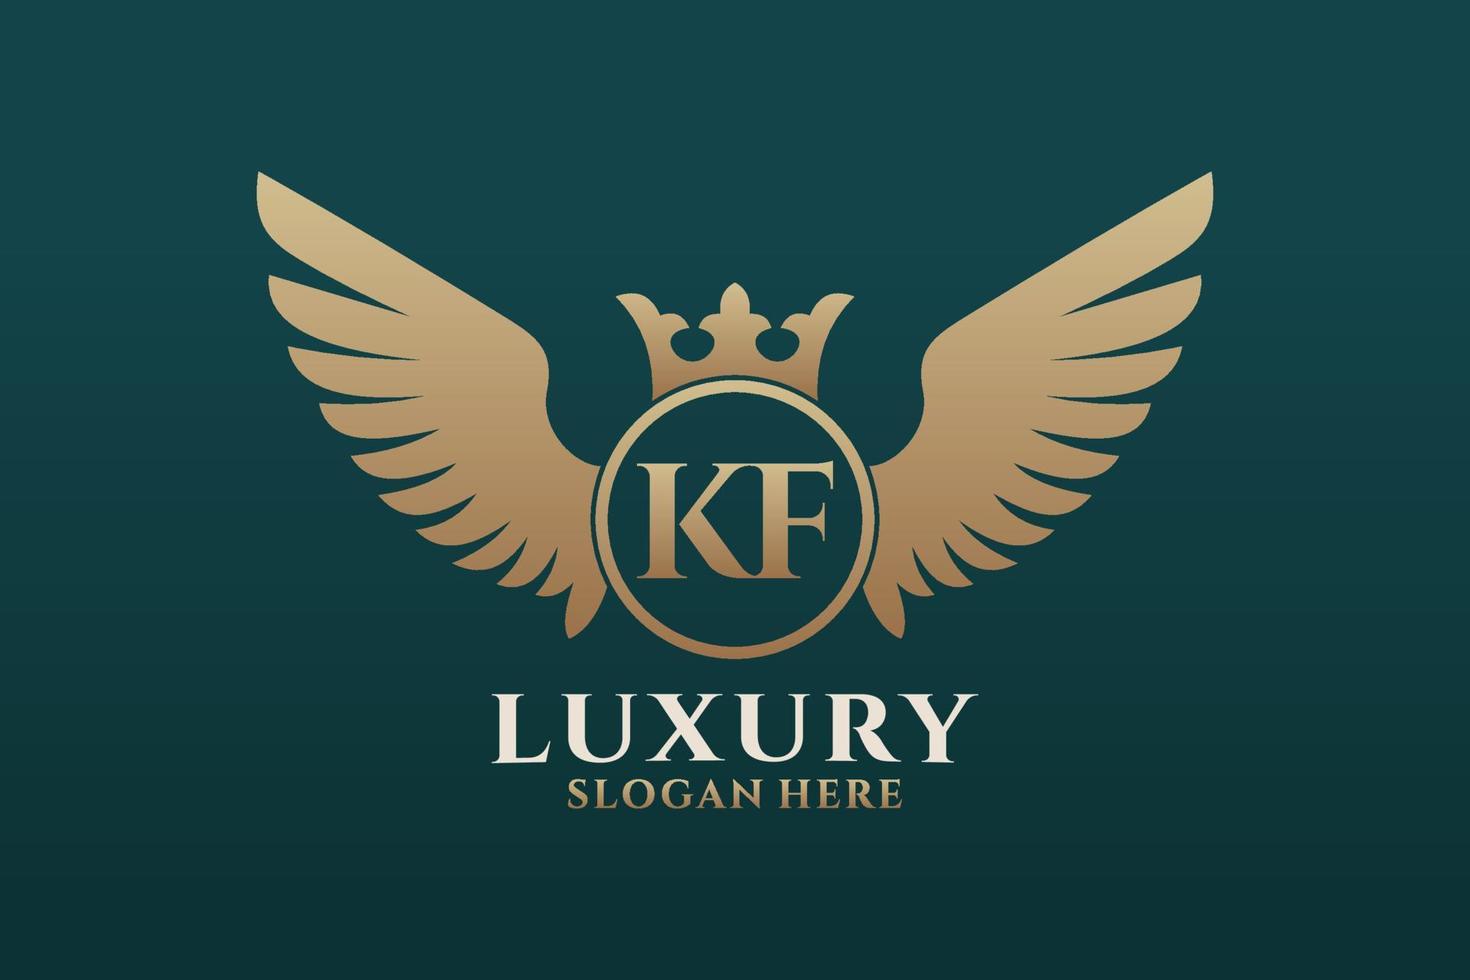 luxe Koninklijk vleugel brief kf kam goud kleur logo vector, zege logo, kam logo, vleugel logo, vector logo sjabloon.